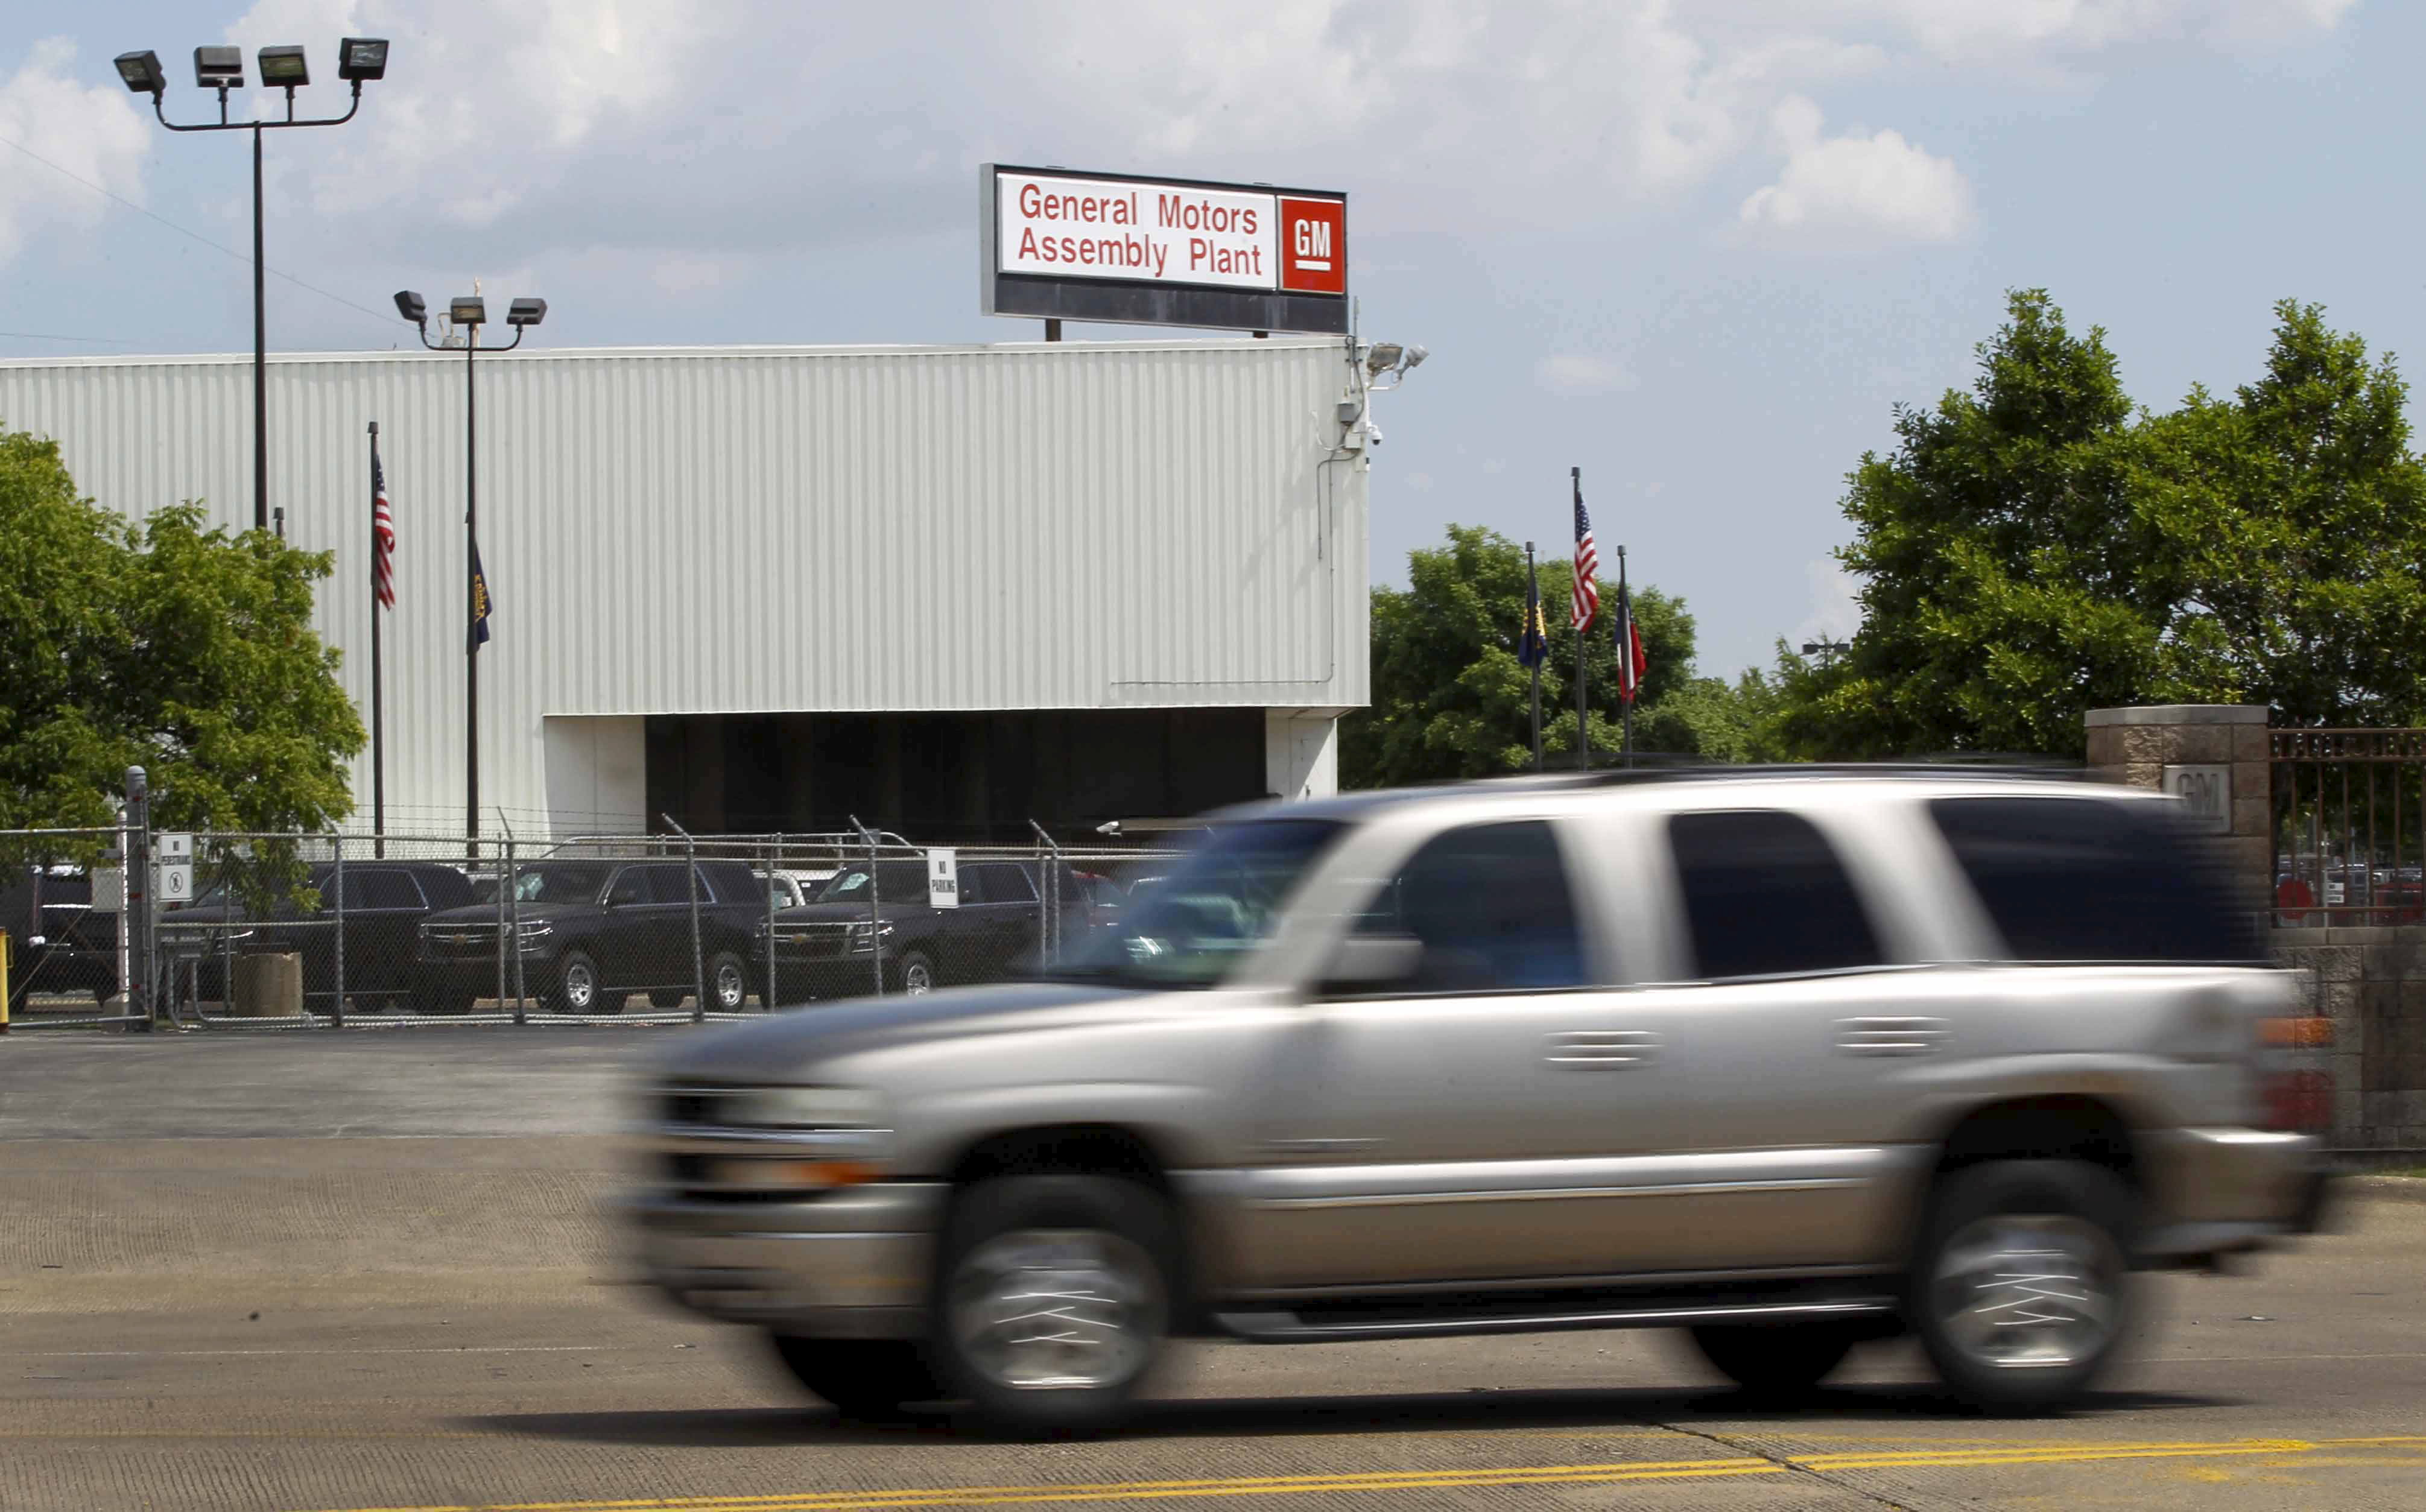 Chevrolet Suburban drives past the General Motors Assembly Plant in Arlington, Texas